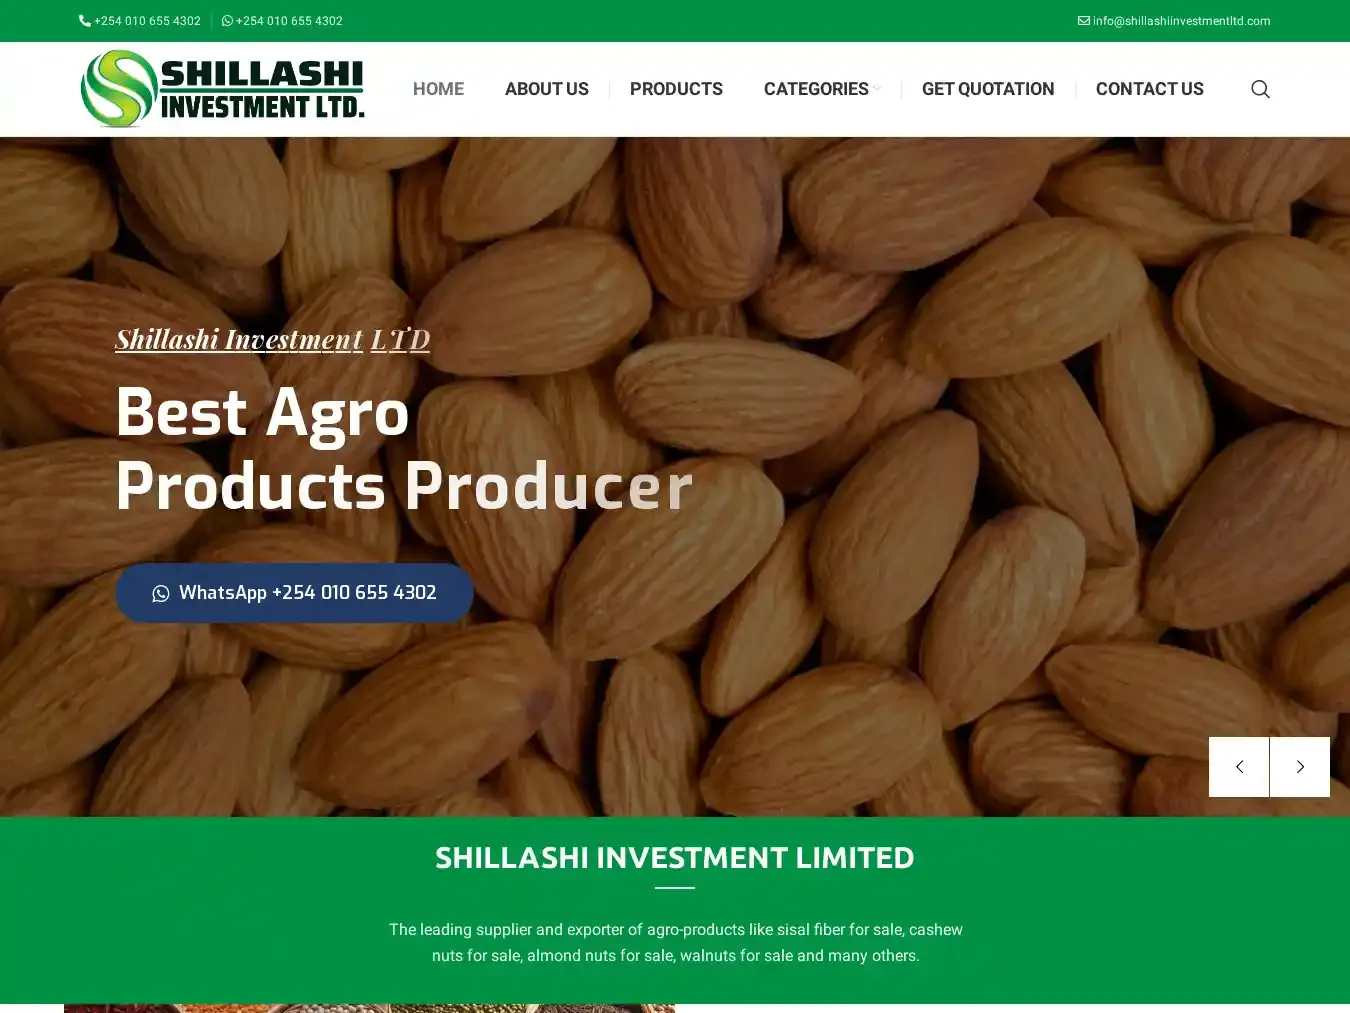 Shillashiinvestmentltd.com Fraudulent Non-Delivery website.